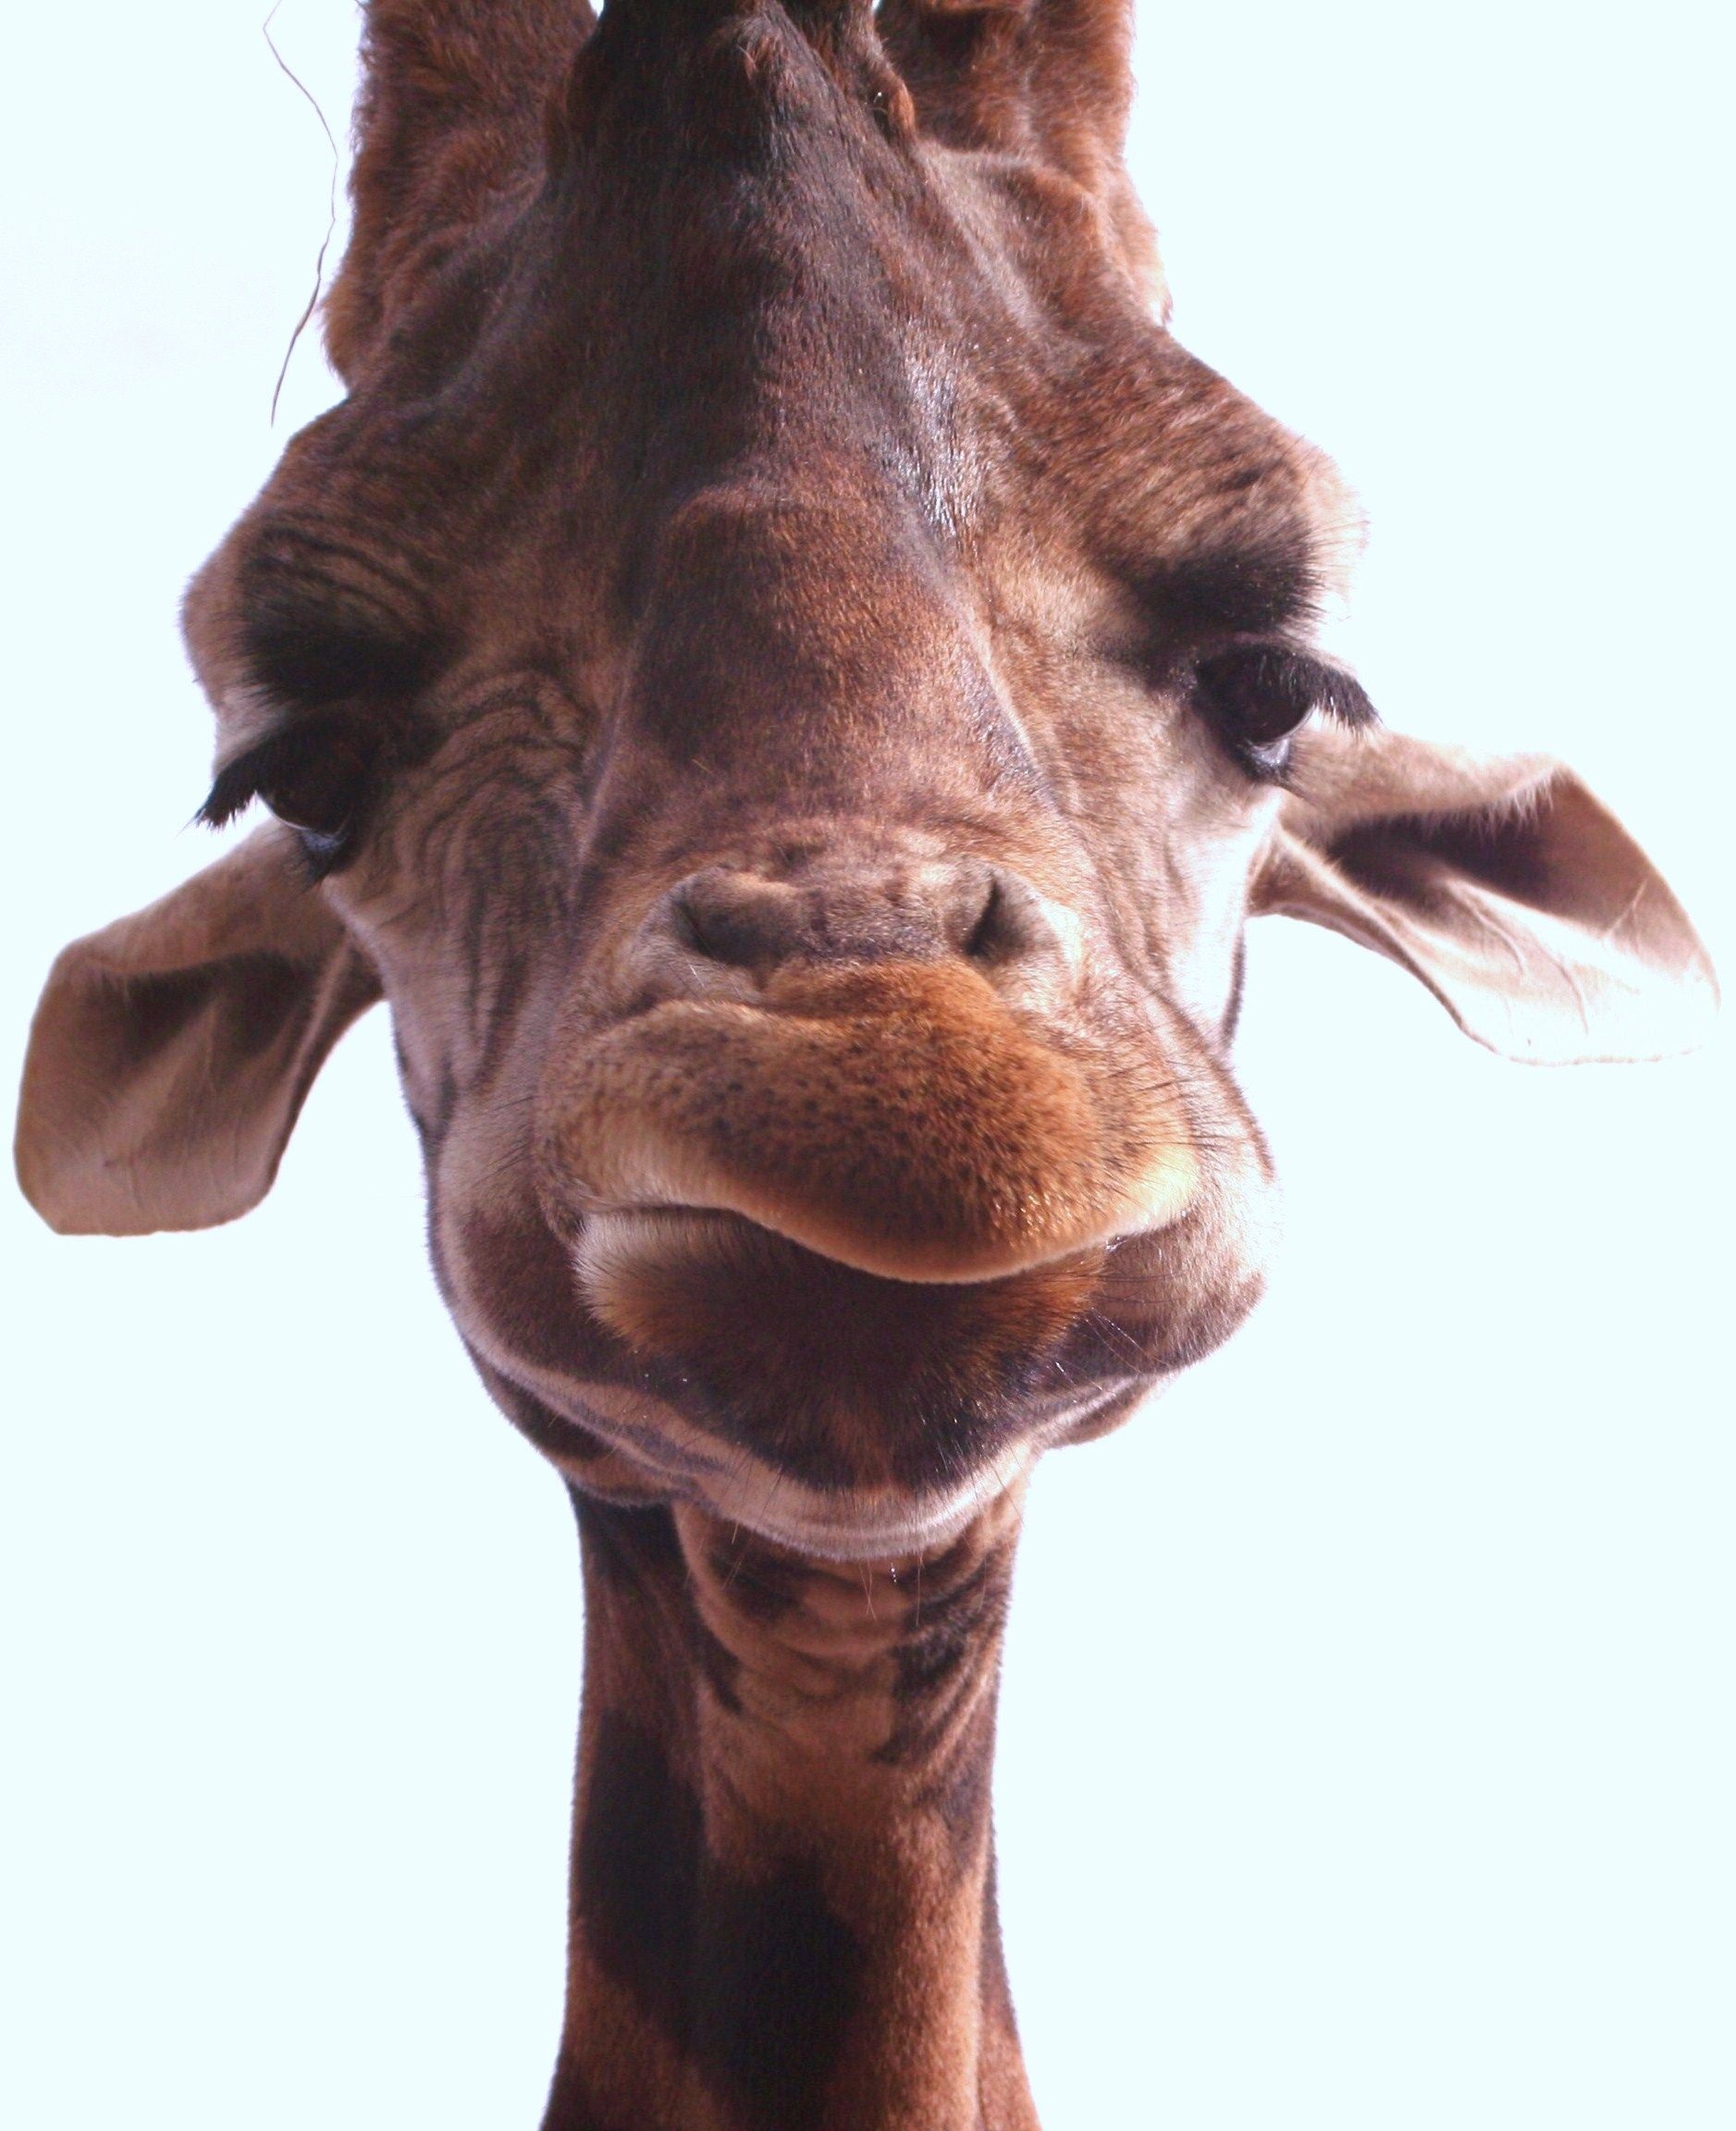 Giraffe closeup photo